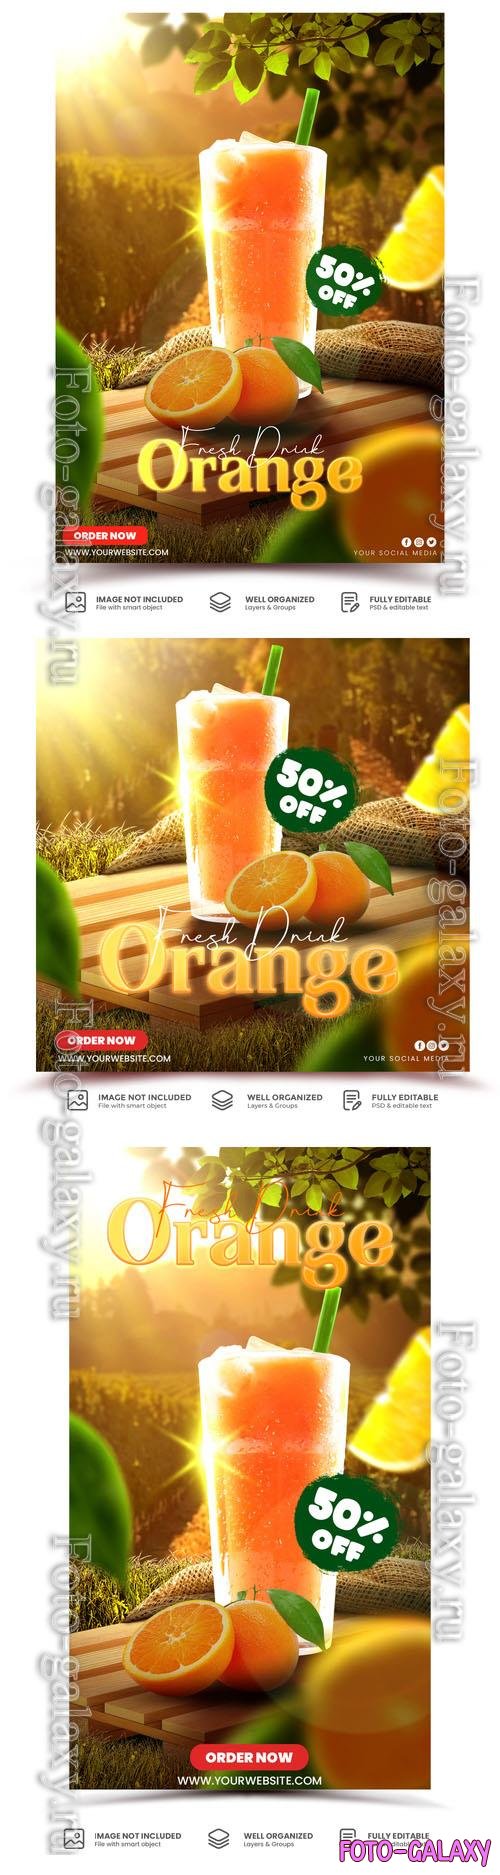 PSD flyer promoting fresh orange juice is displayed on the drink menu template